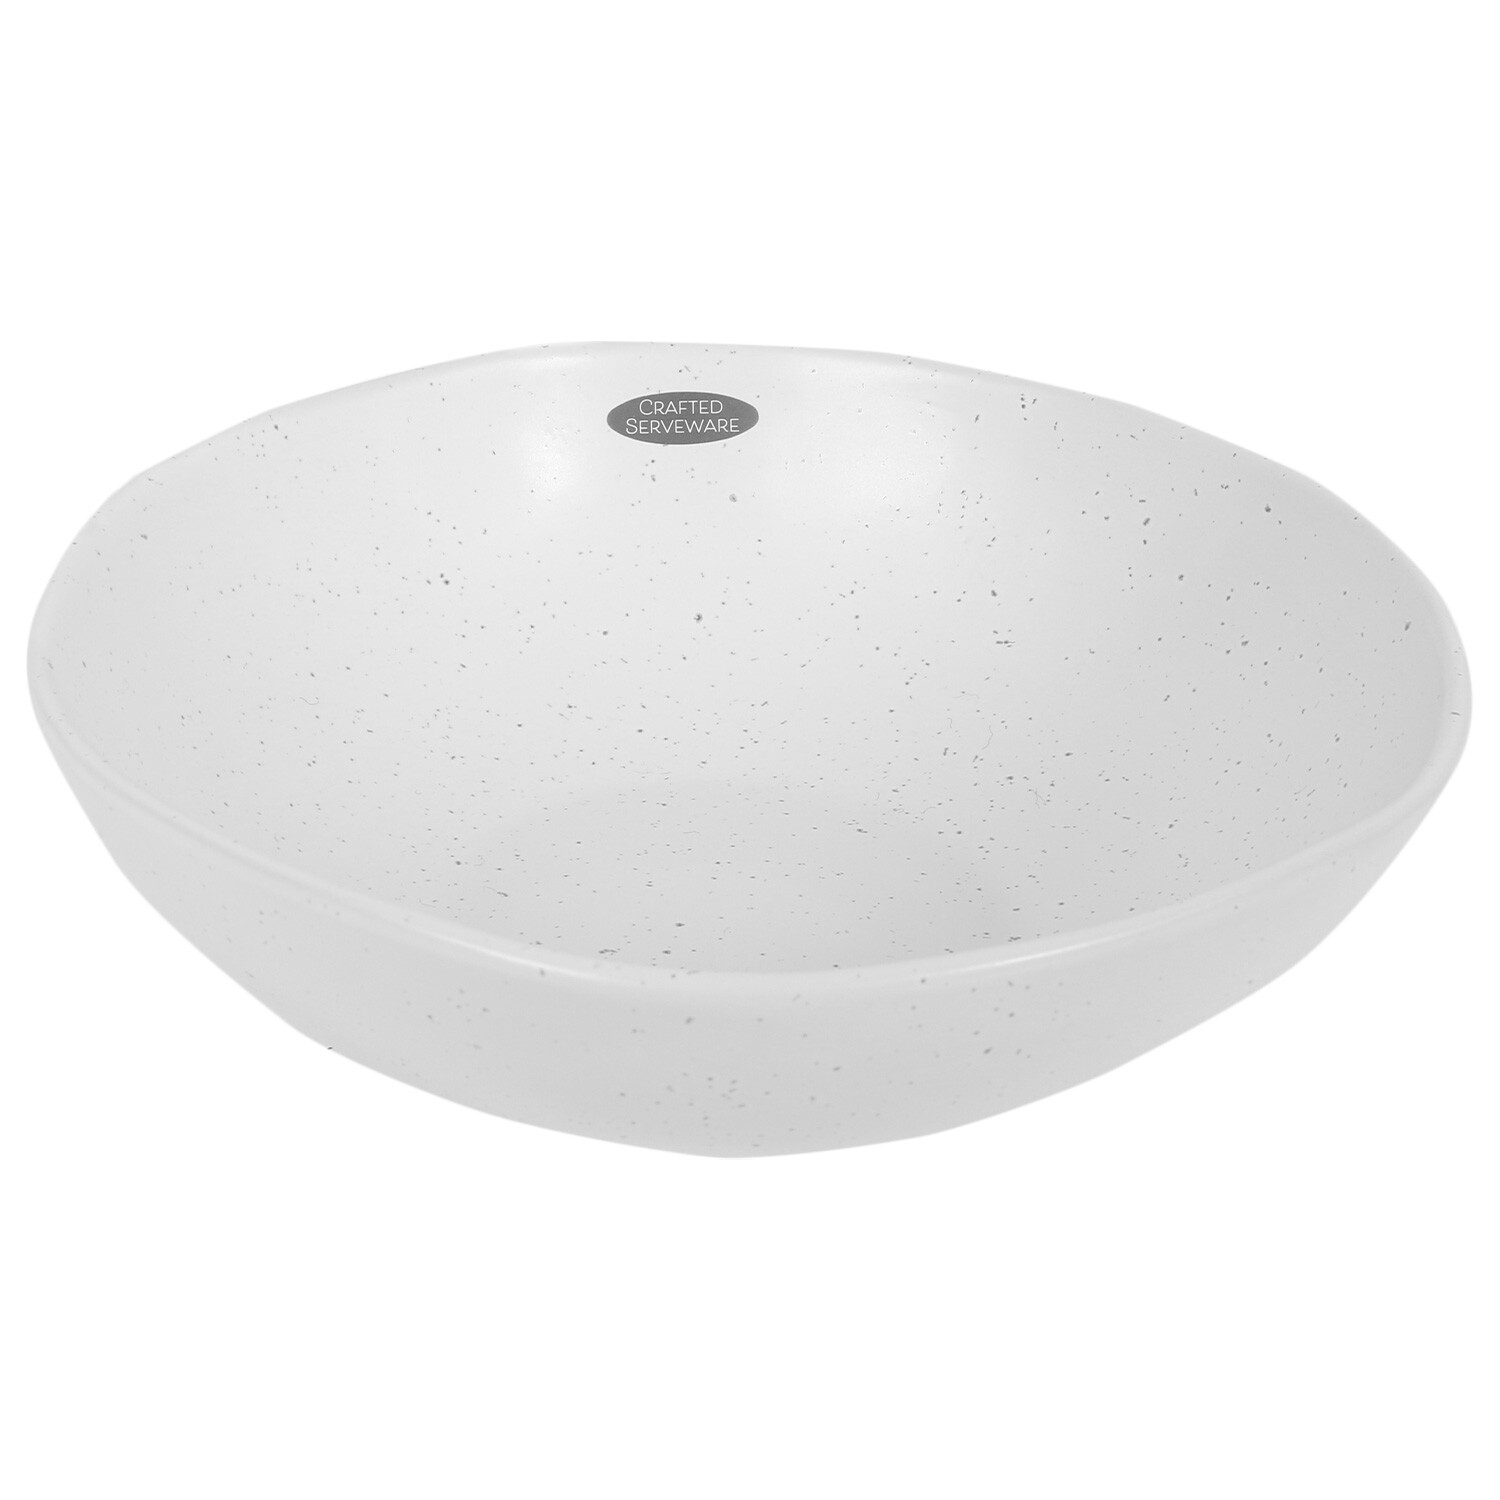 Crafted Serveware Stoneware Serve Bowl - White Image 1